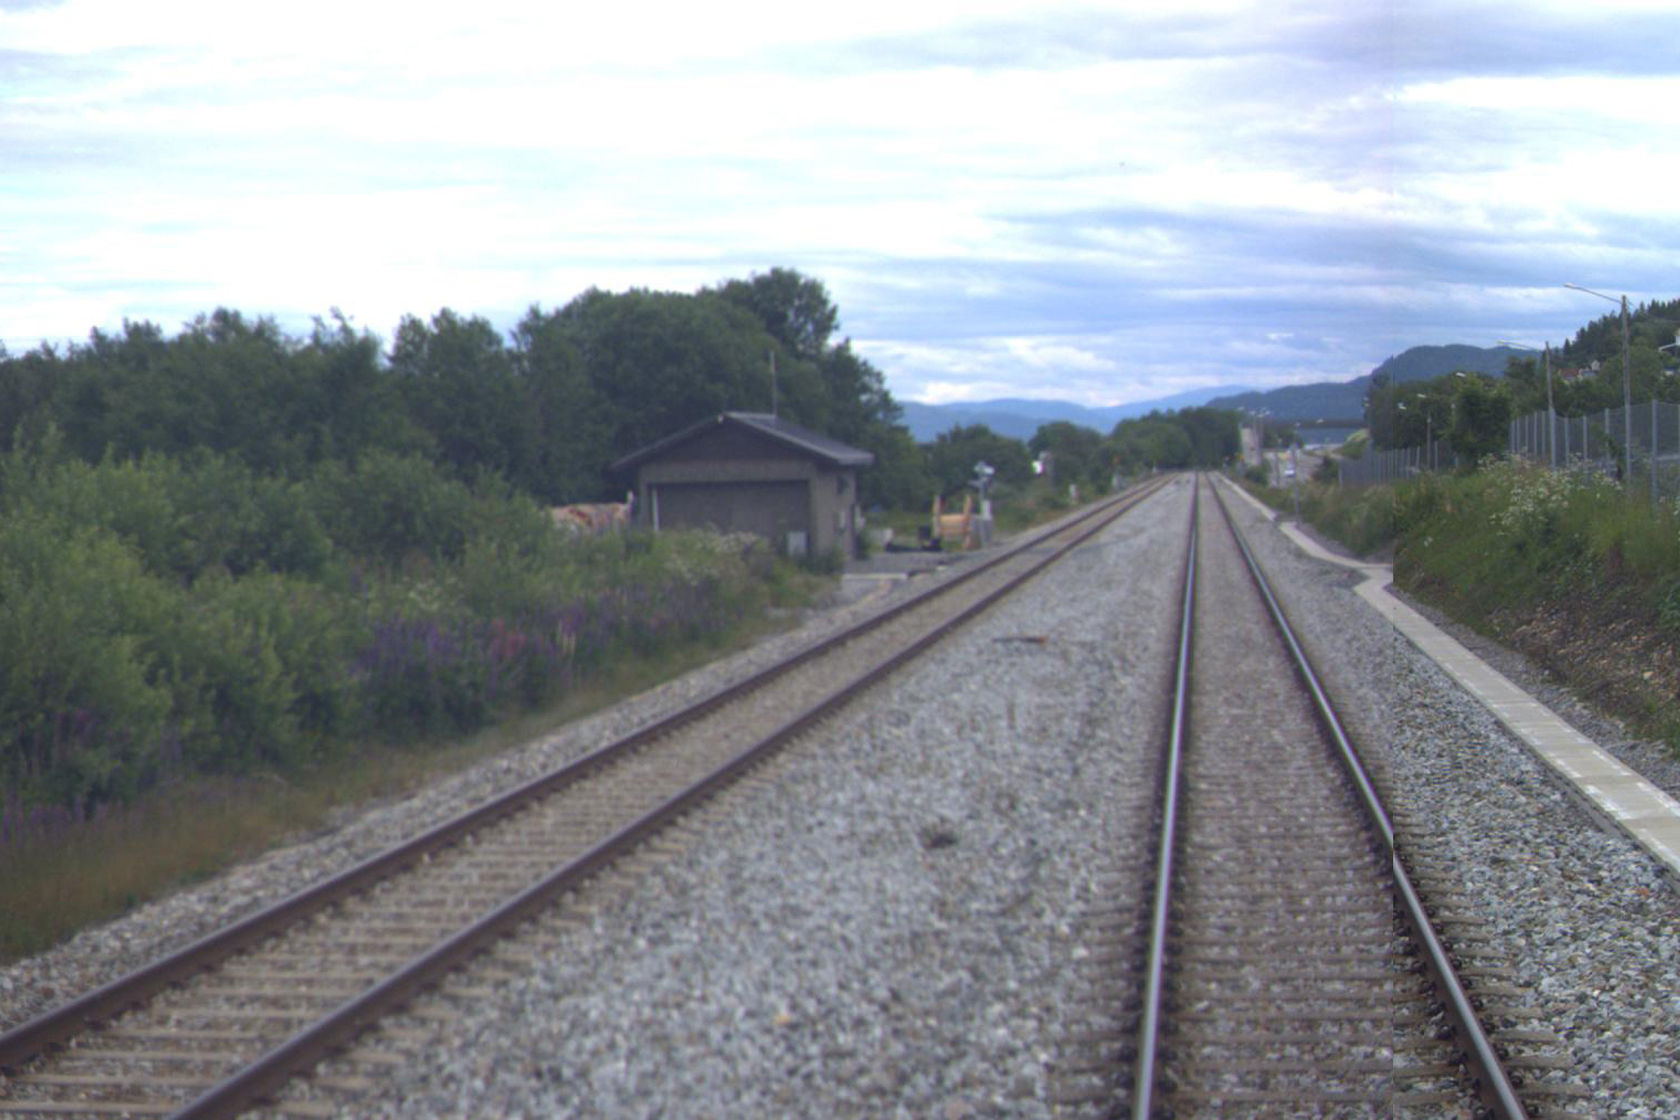 Tracks at Midtsandan station